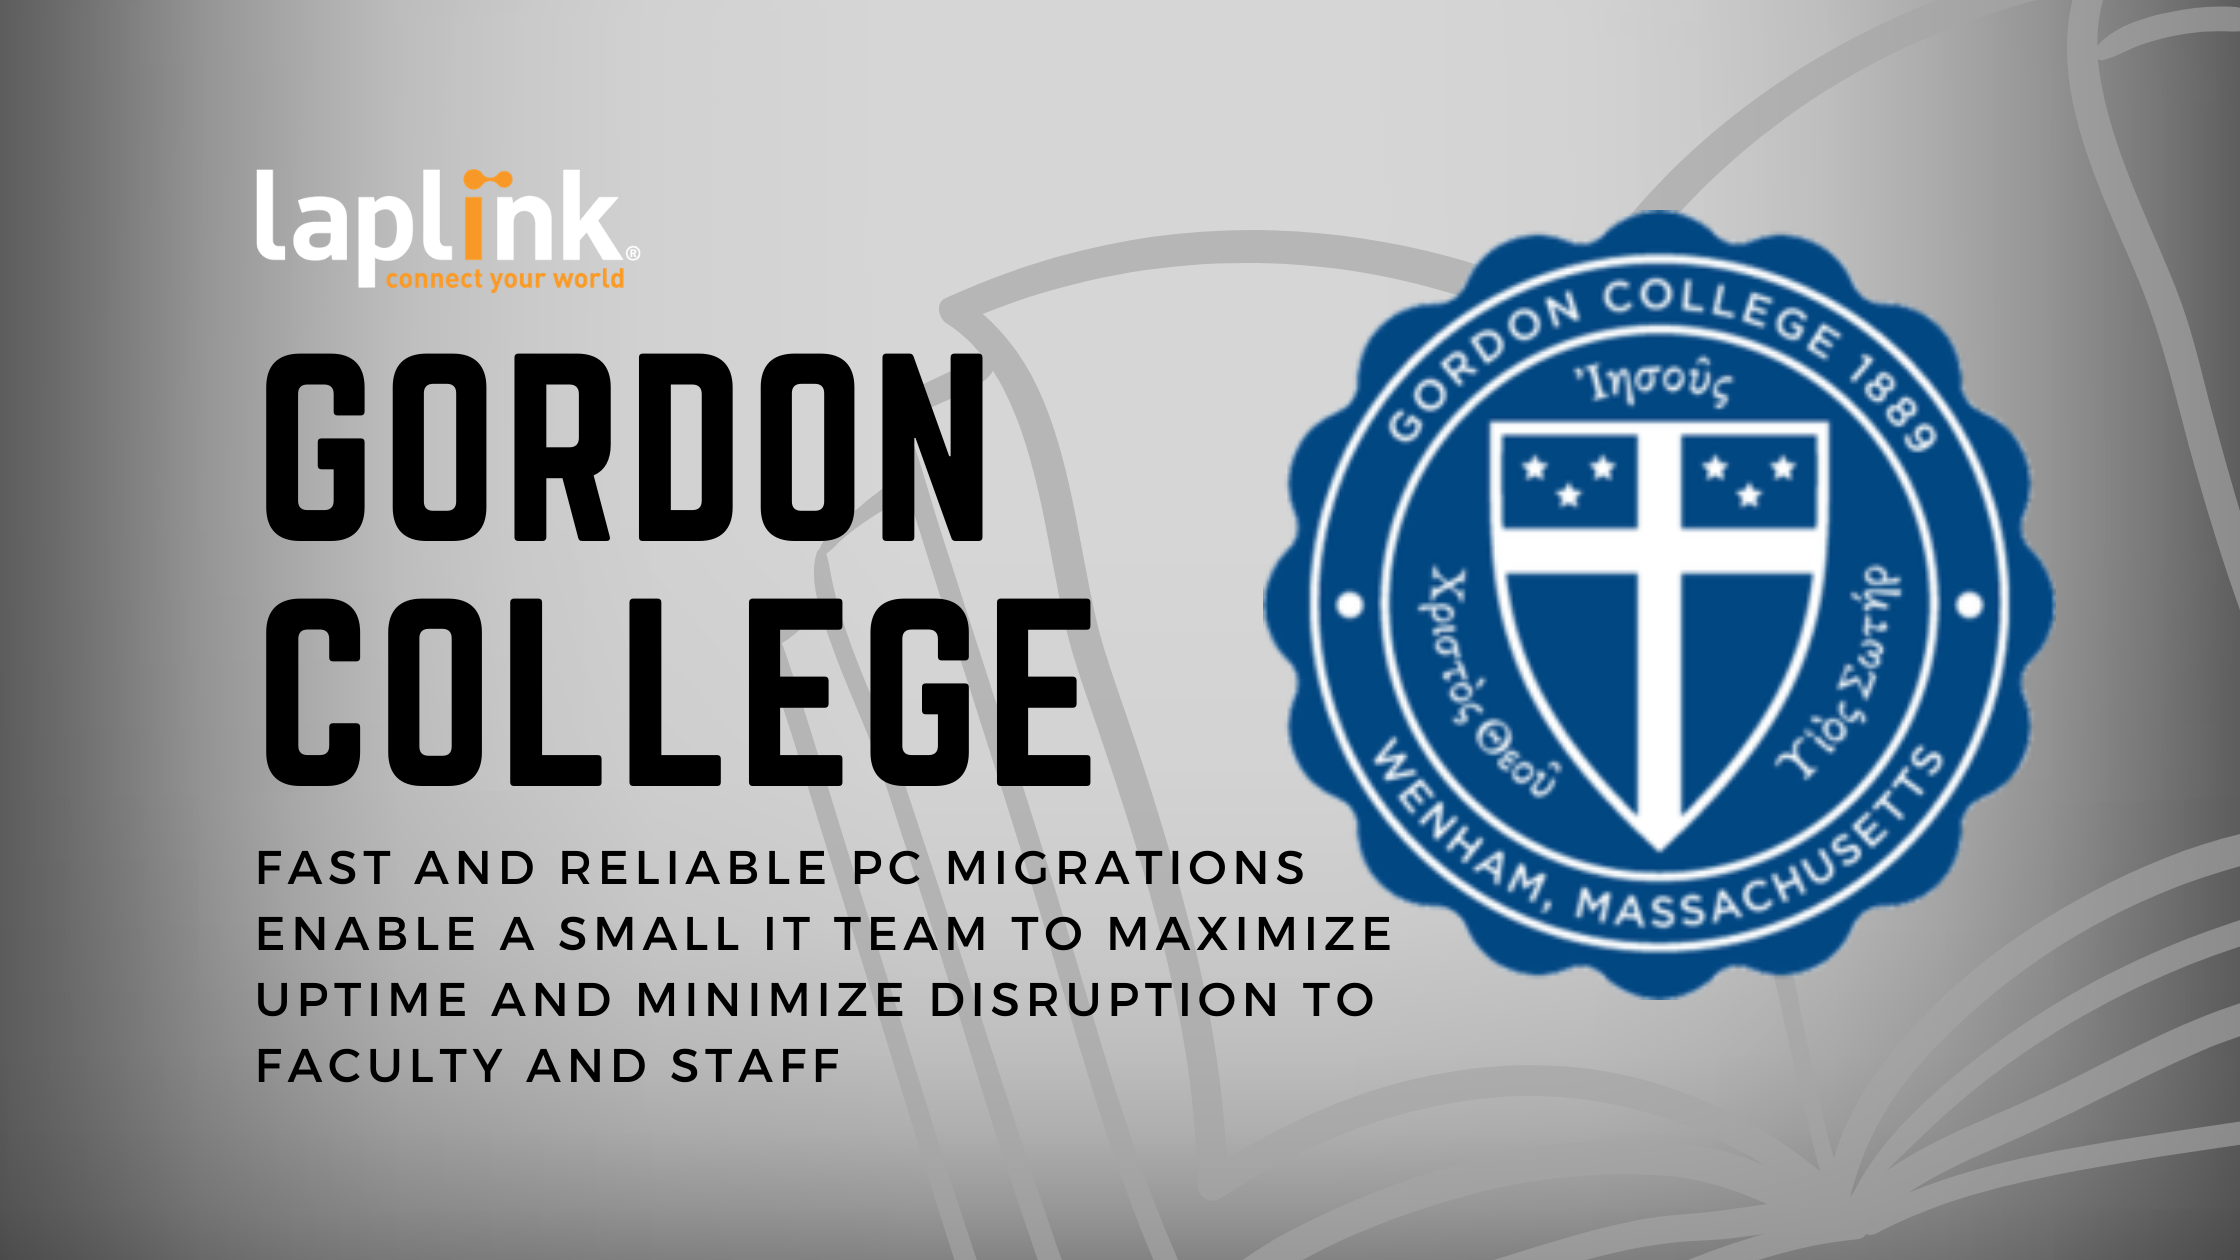 Gordon College Breezes Through “Upgrade Season” with the Help of